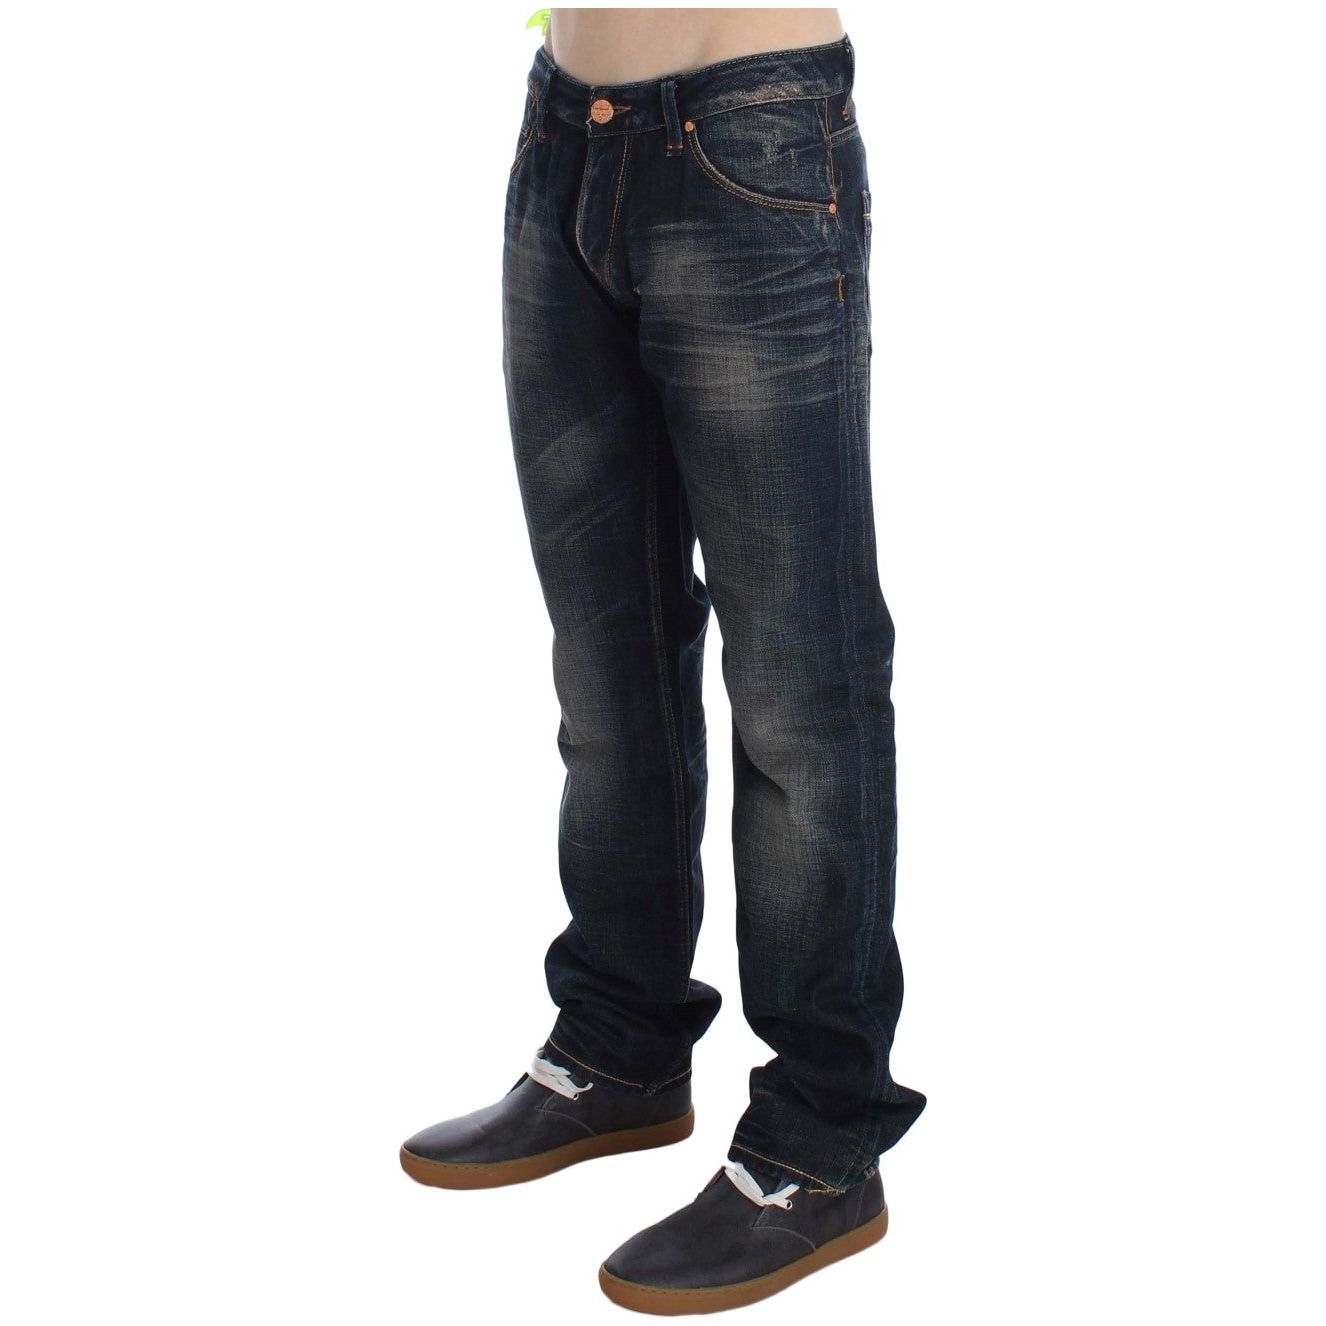 Acht Elegant Straight Fit Low Waist Men's Jeans blue-wash-straight-fit-low-waist-jeans 299234-blue-wash-straight-fit-low-waist-jeans-2.jpg